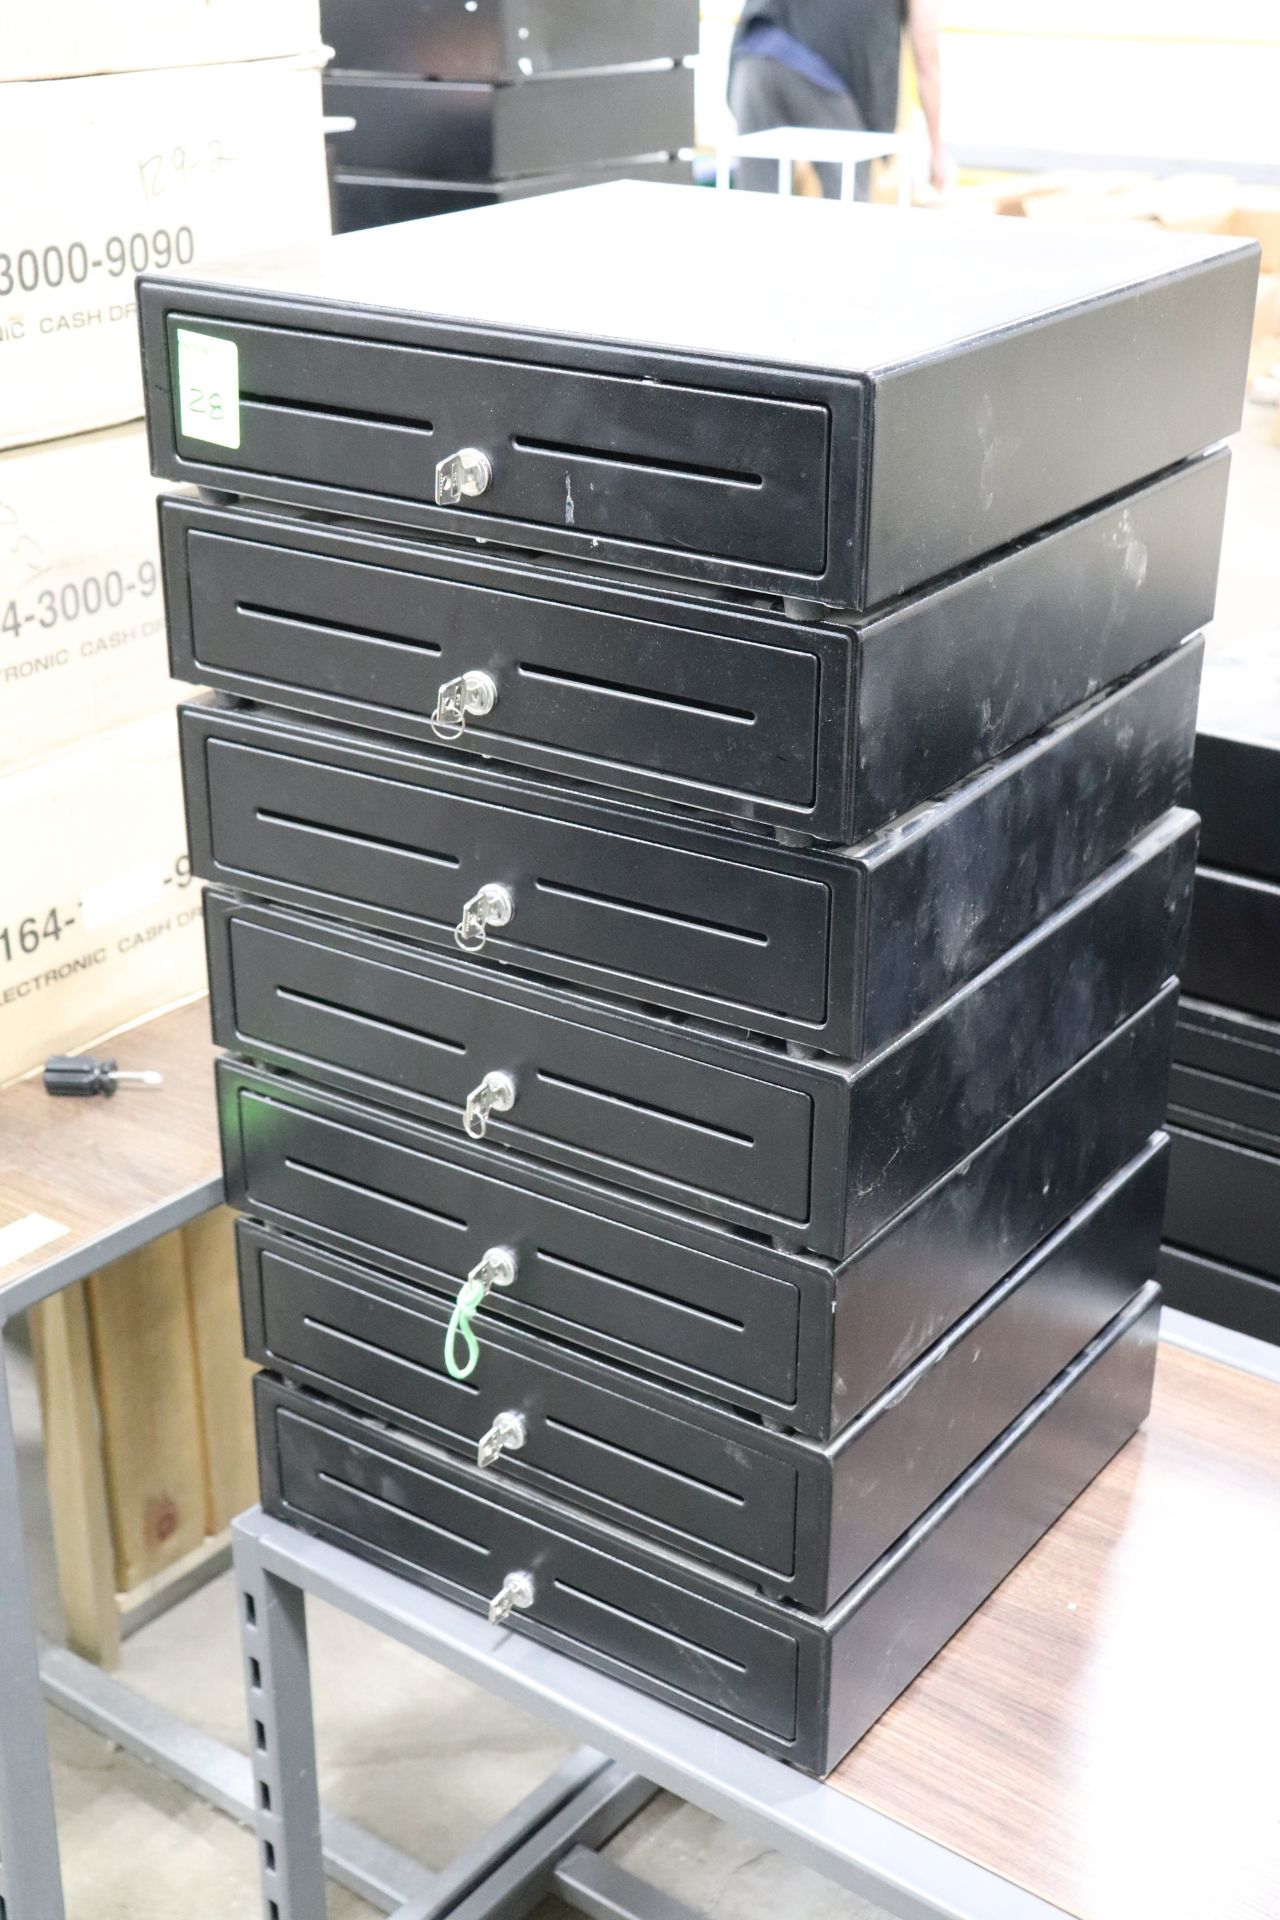 Seven cash drawers